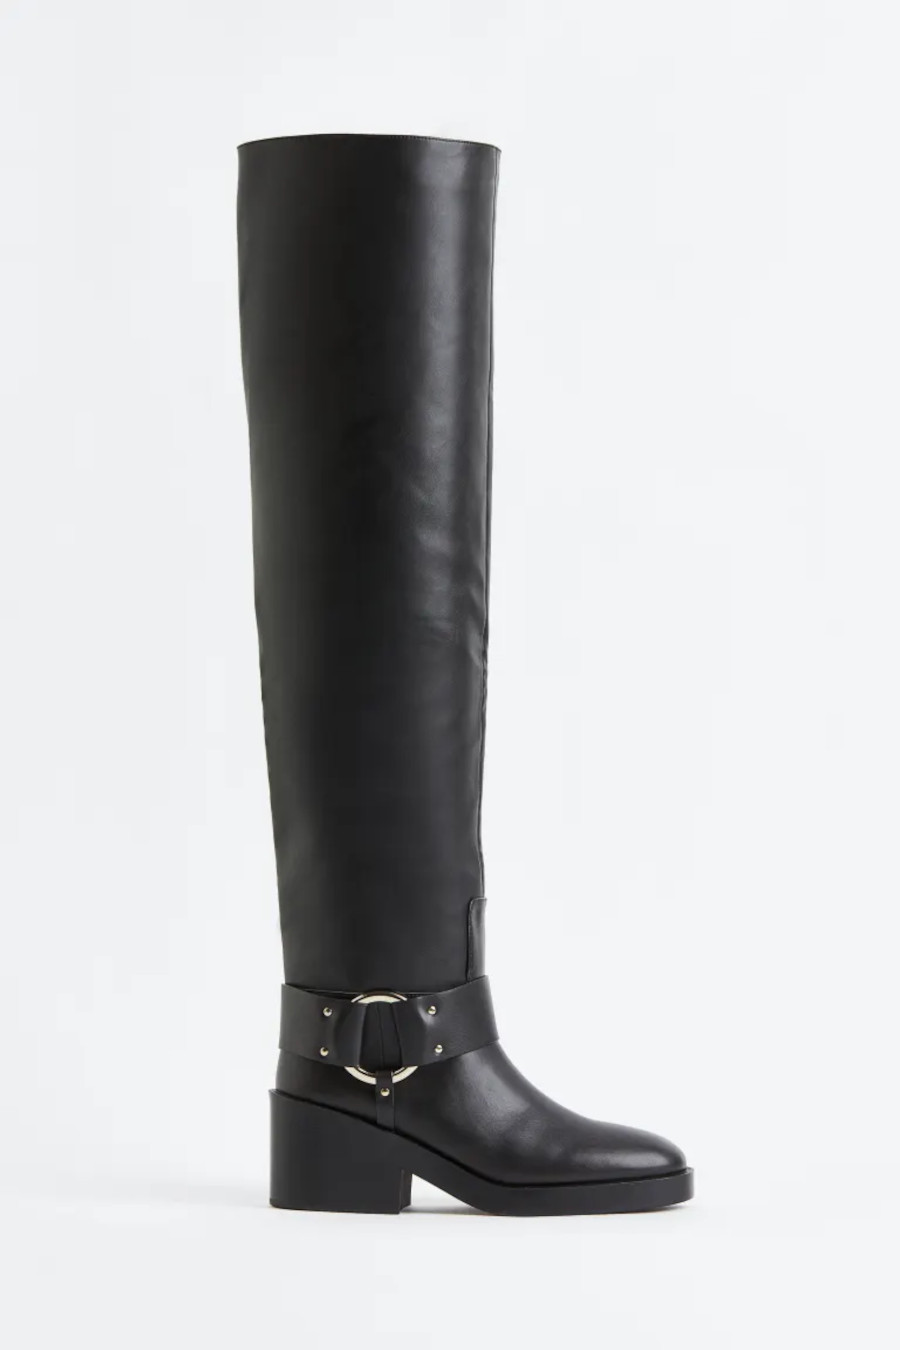 H Νικολέττα Ράλλη με over the knee μπότες και κρουαζέ φόρεμα από τα H&M